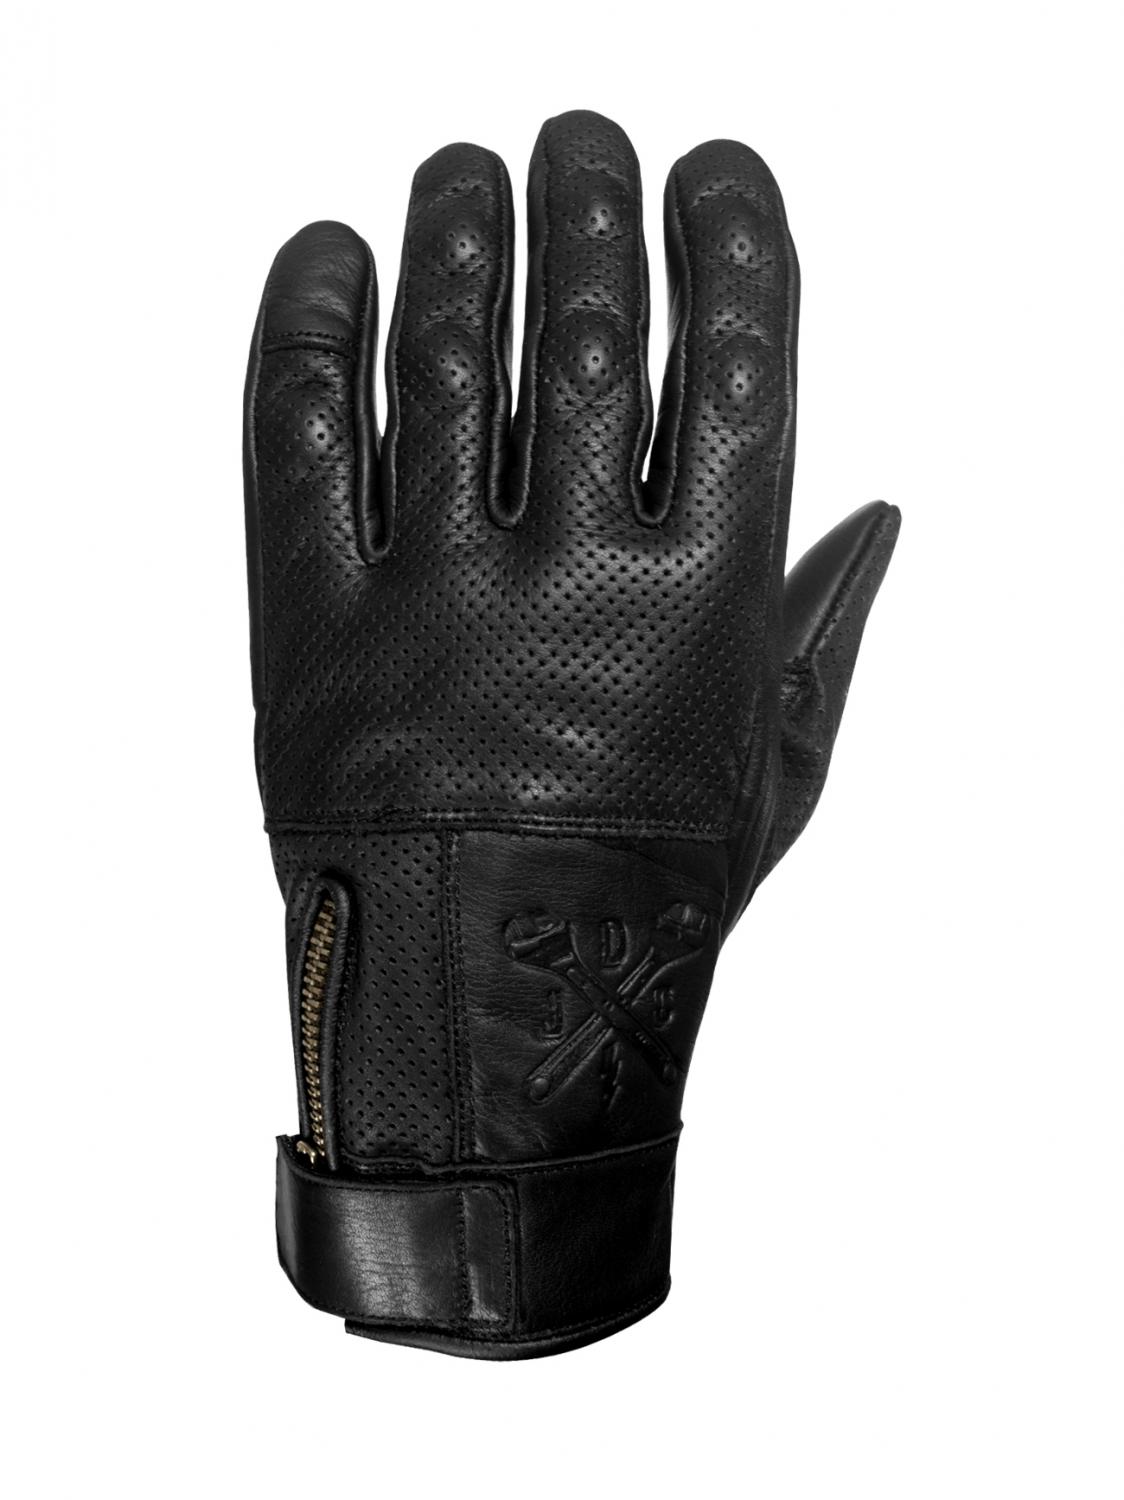 John Doe Shaft Motorcycle Gloves, Black